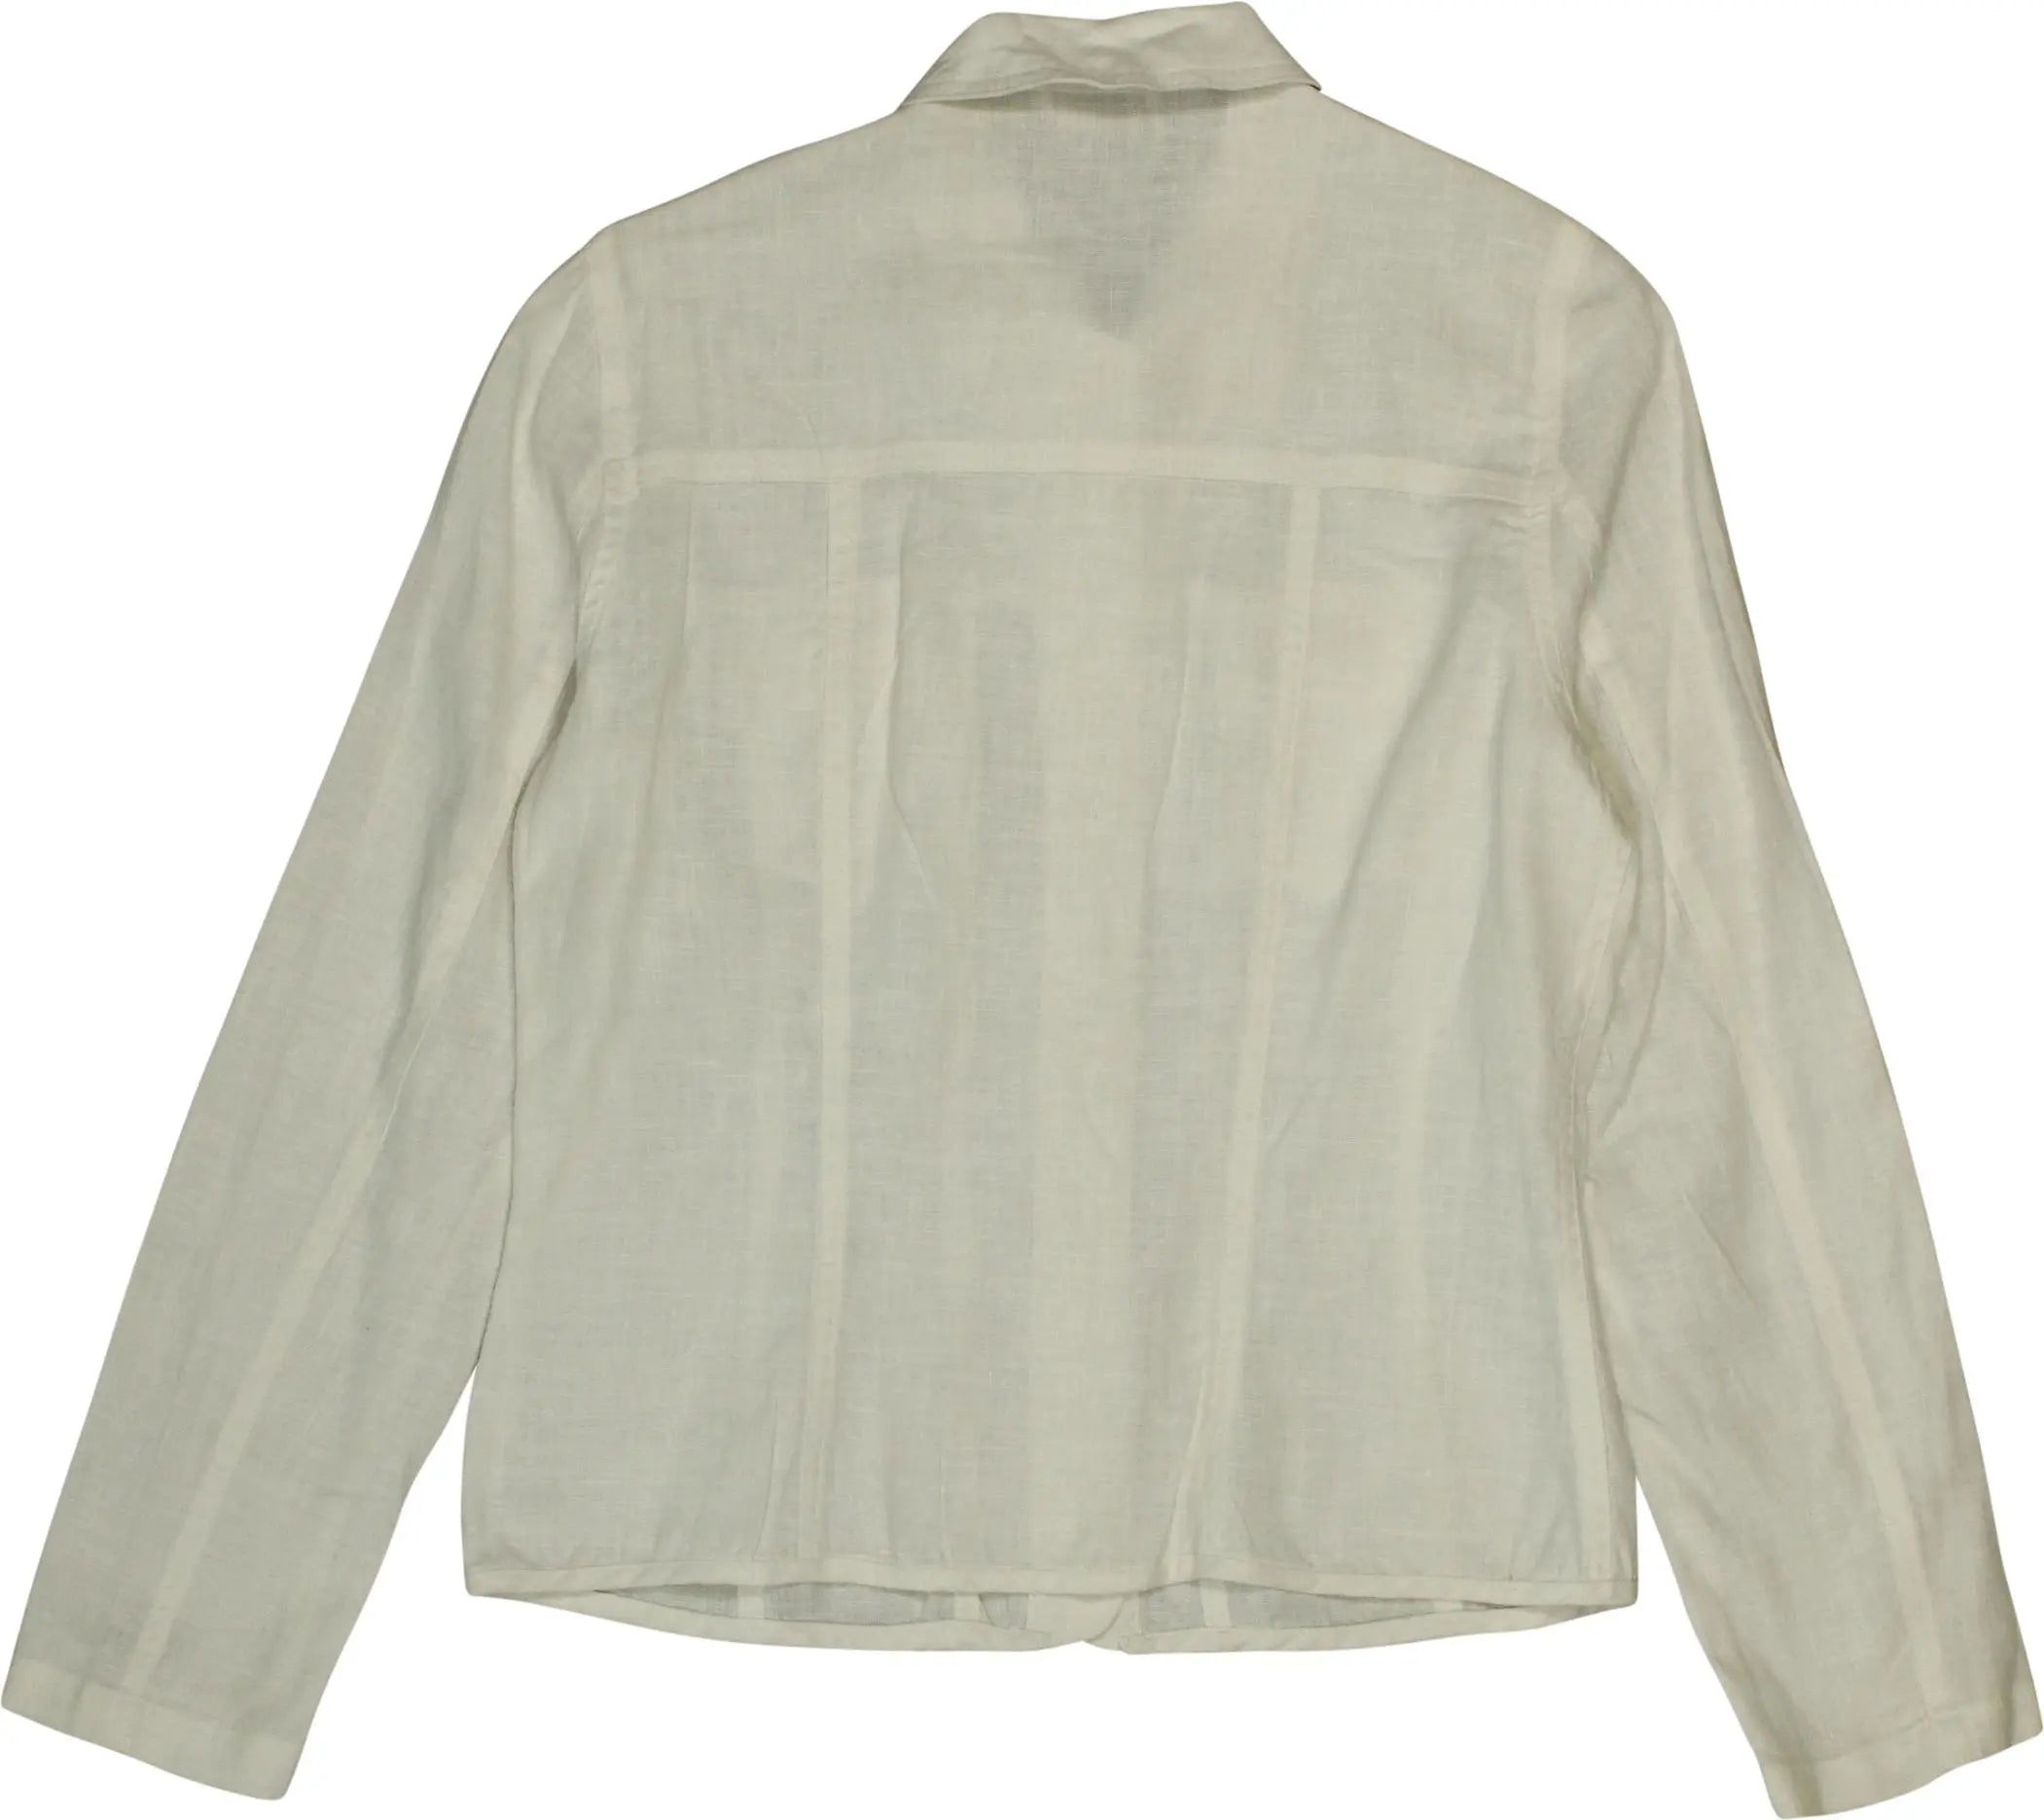 Hummelsheim - Linen Shirt- ThriftTale.com - Vintage and second handclothing